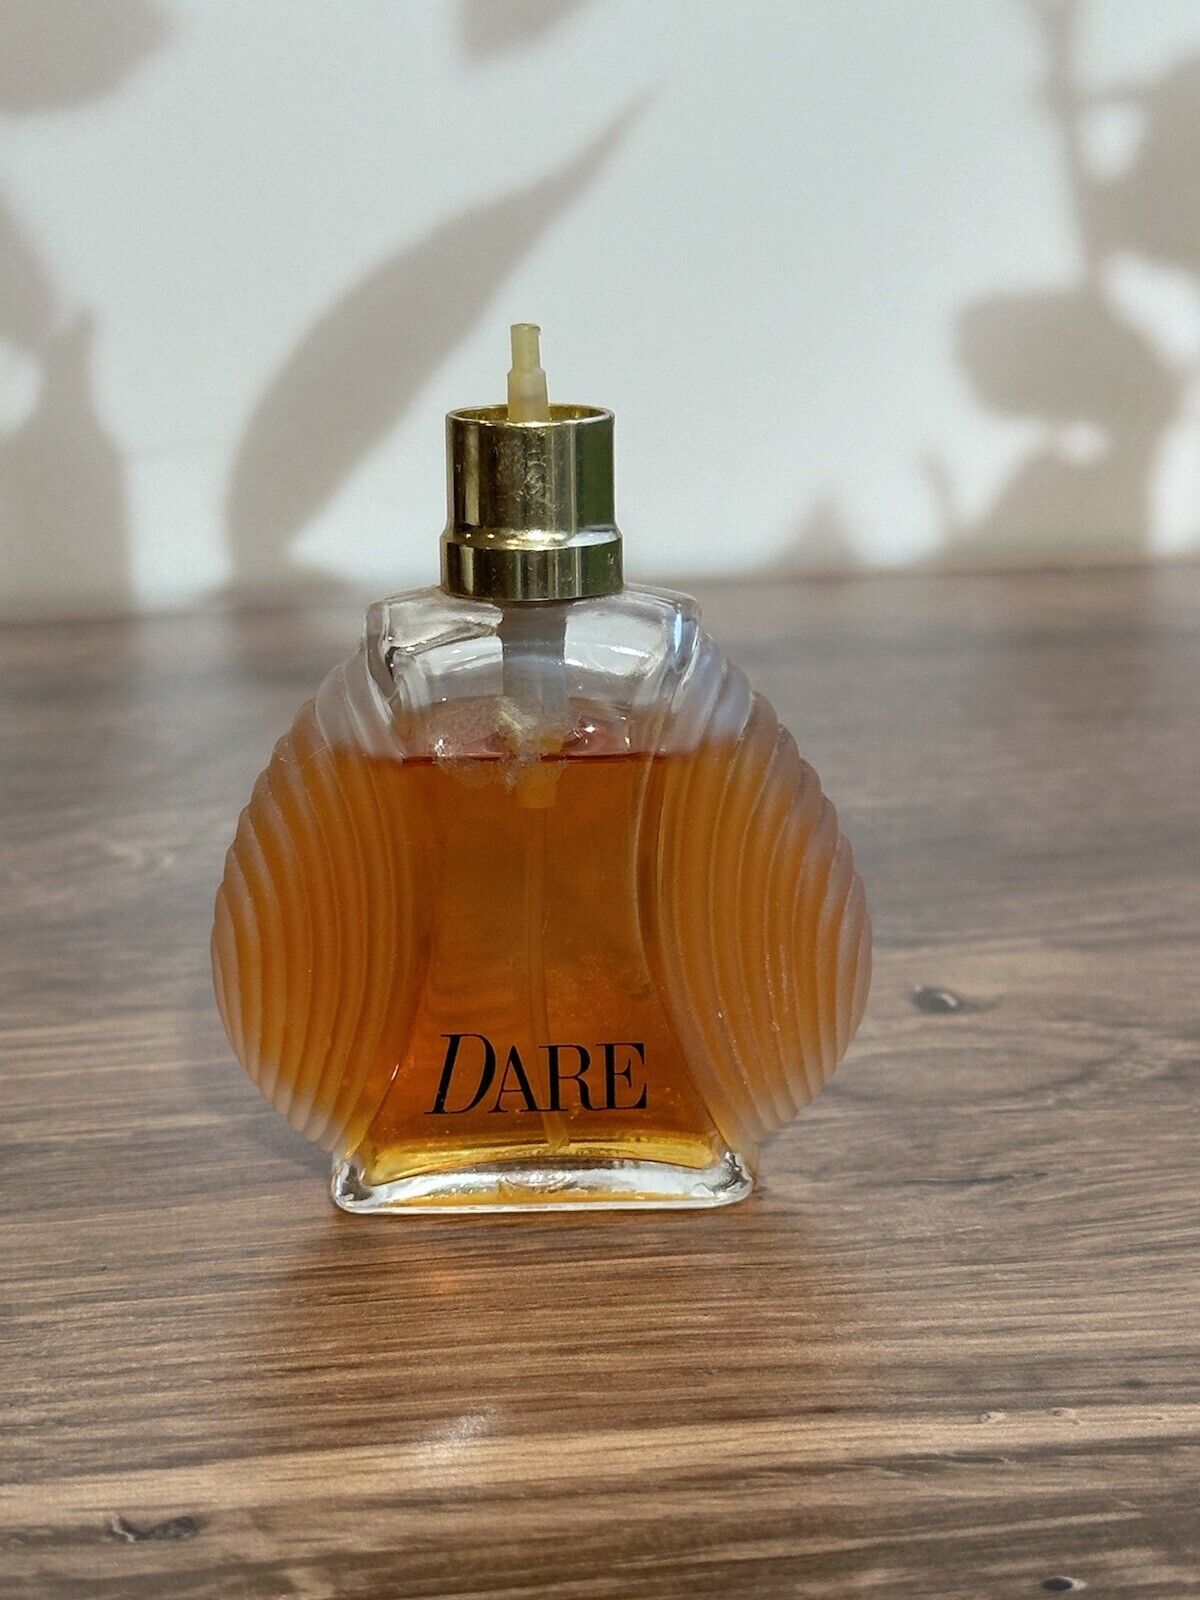 Dare by Quintessence Eau de Parfum Spray 50 ml 1.7oz Vintage Appr 85% Full As Is